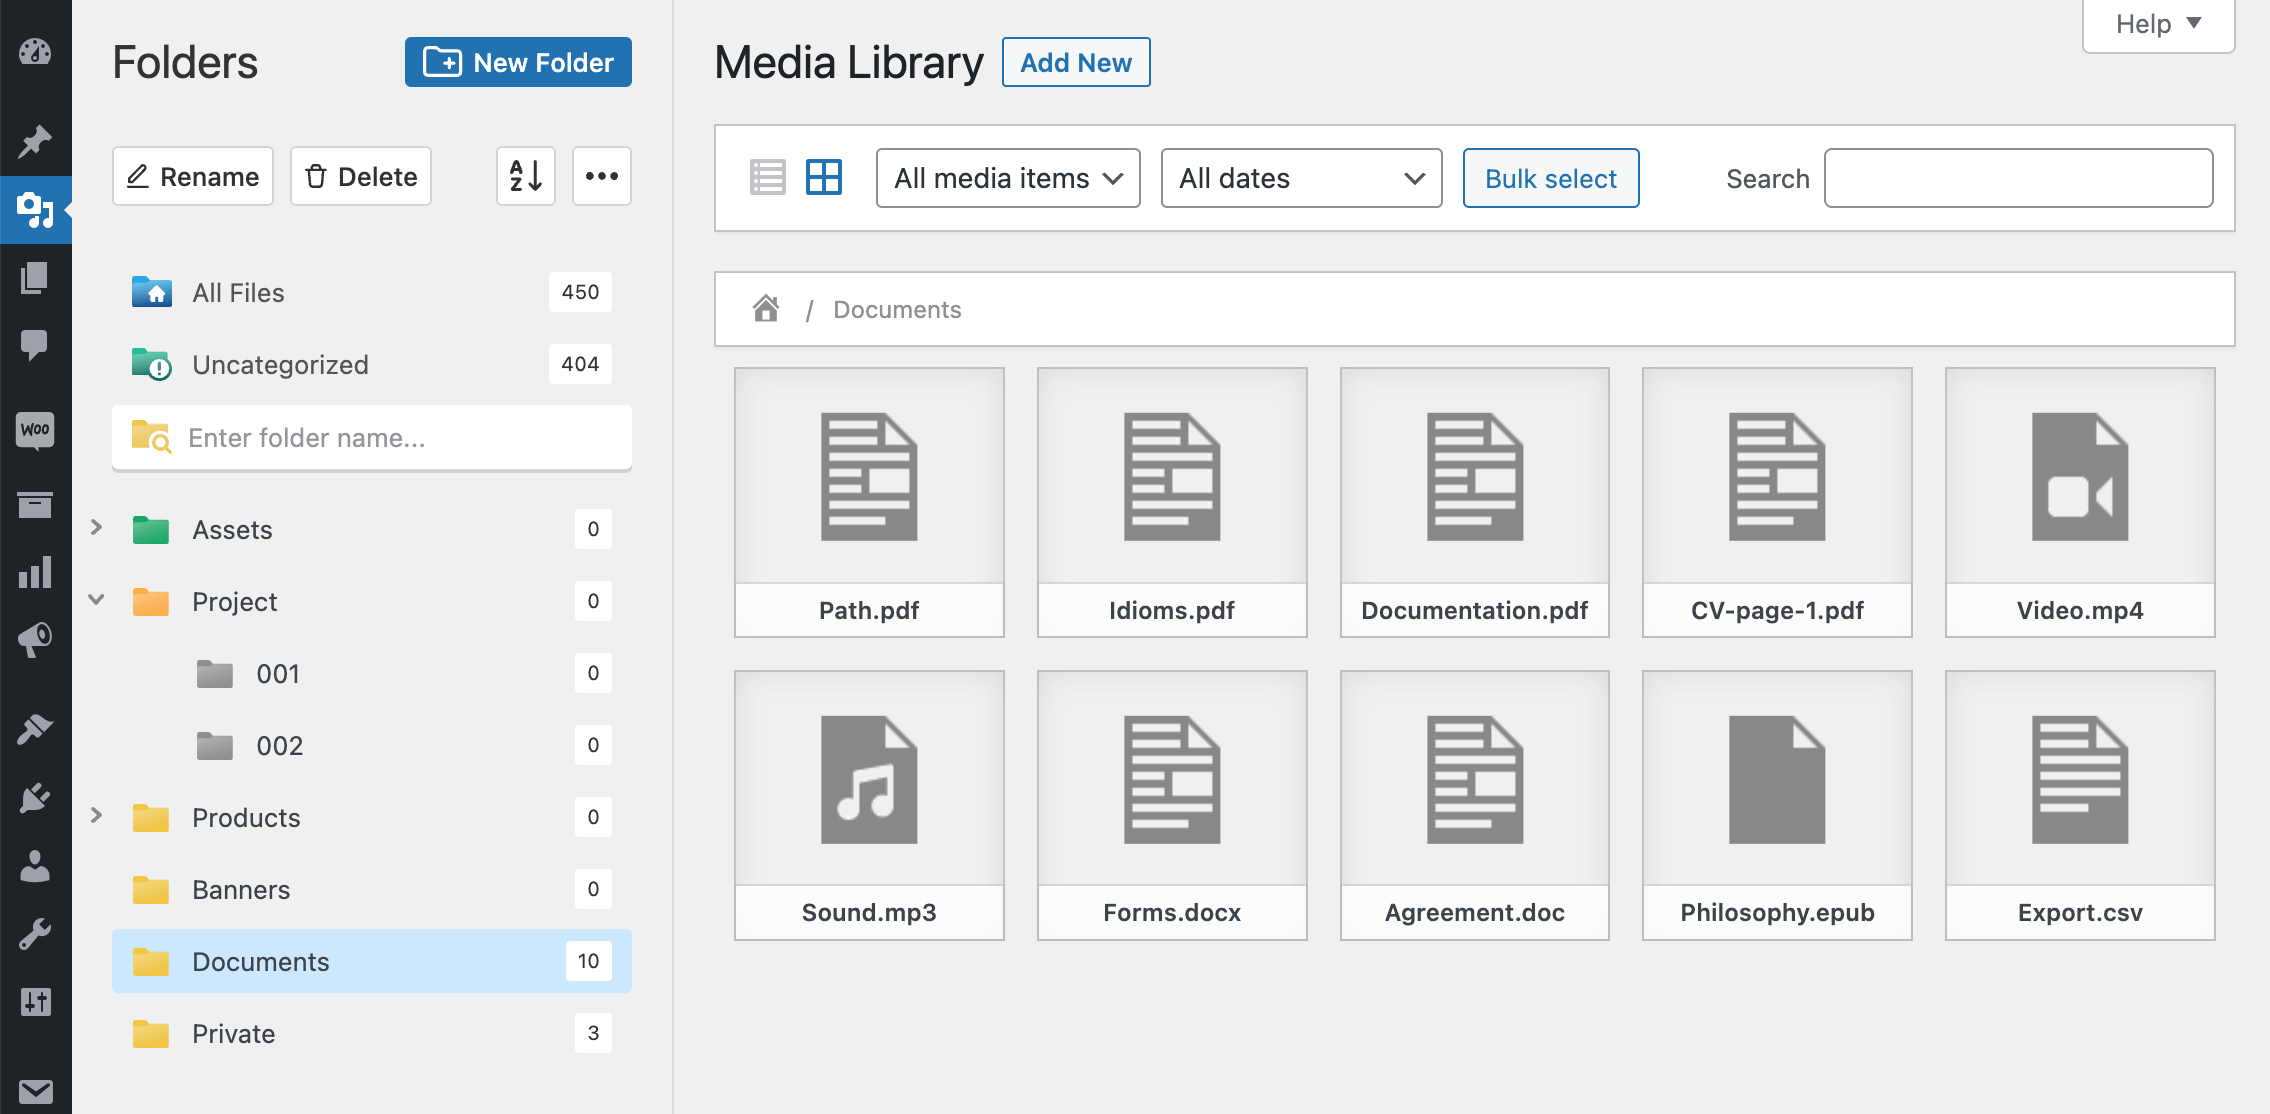 Categorized document folder files